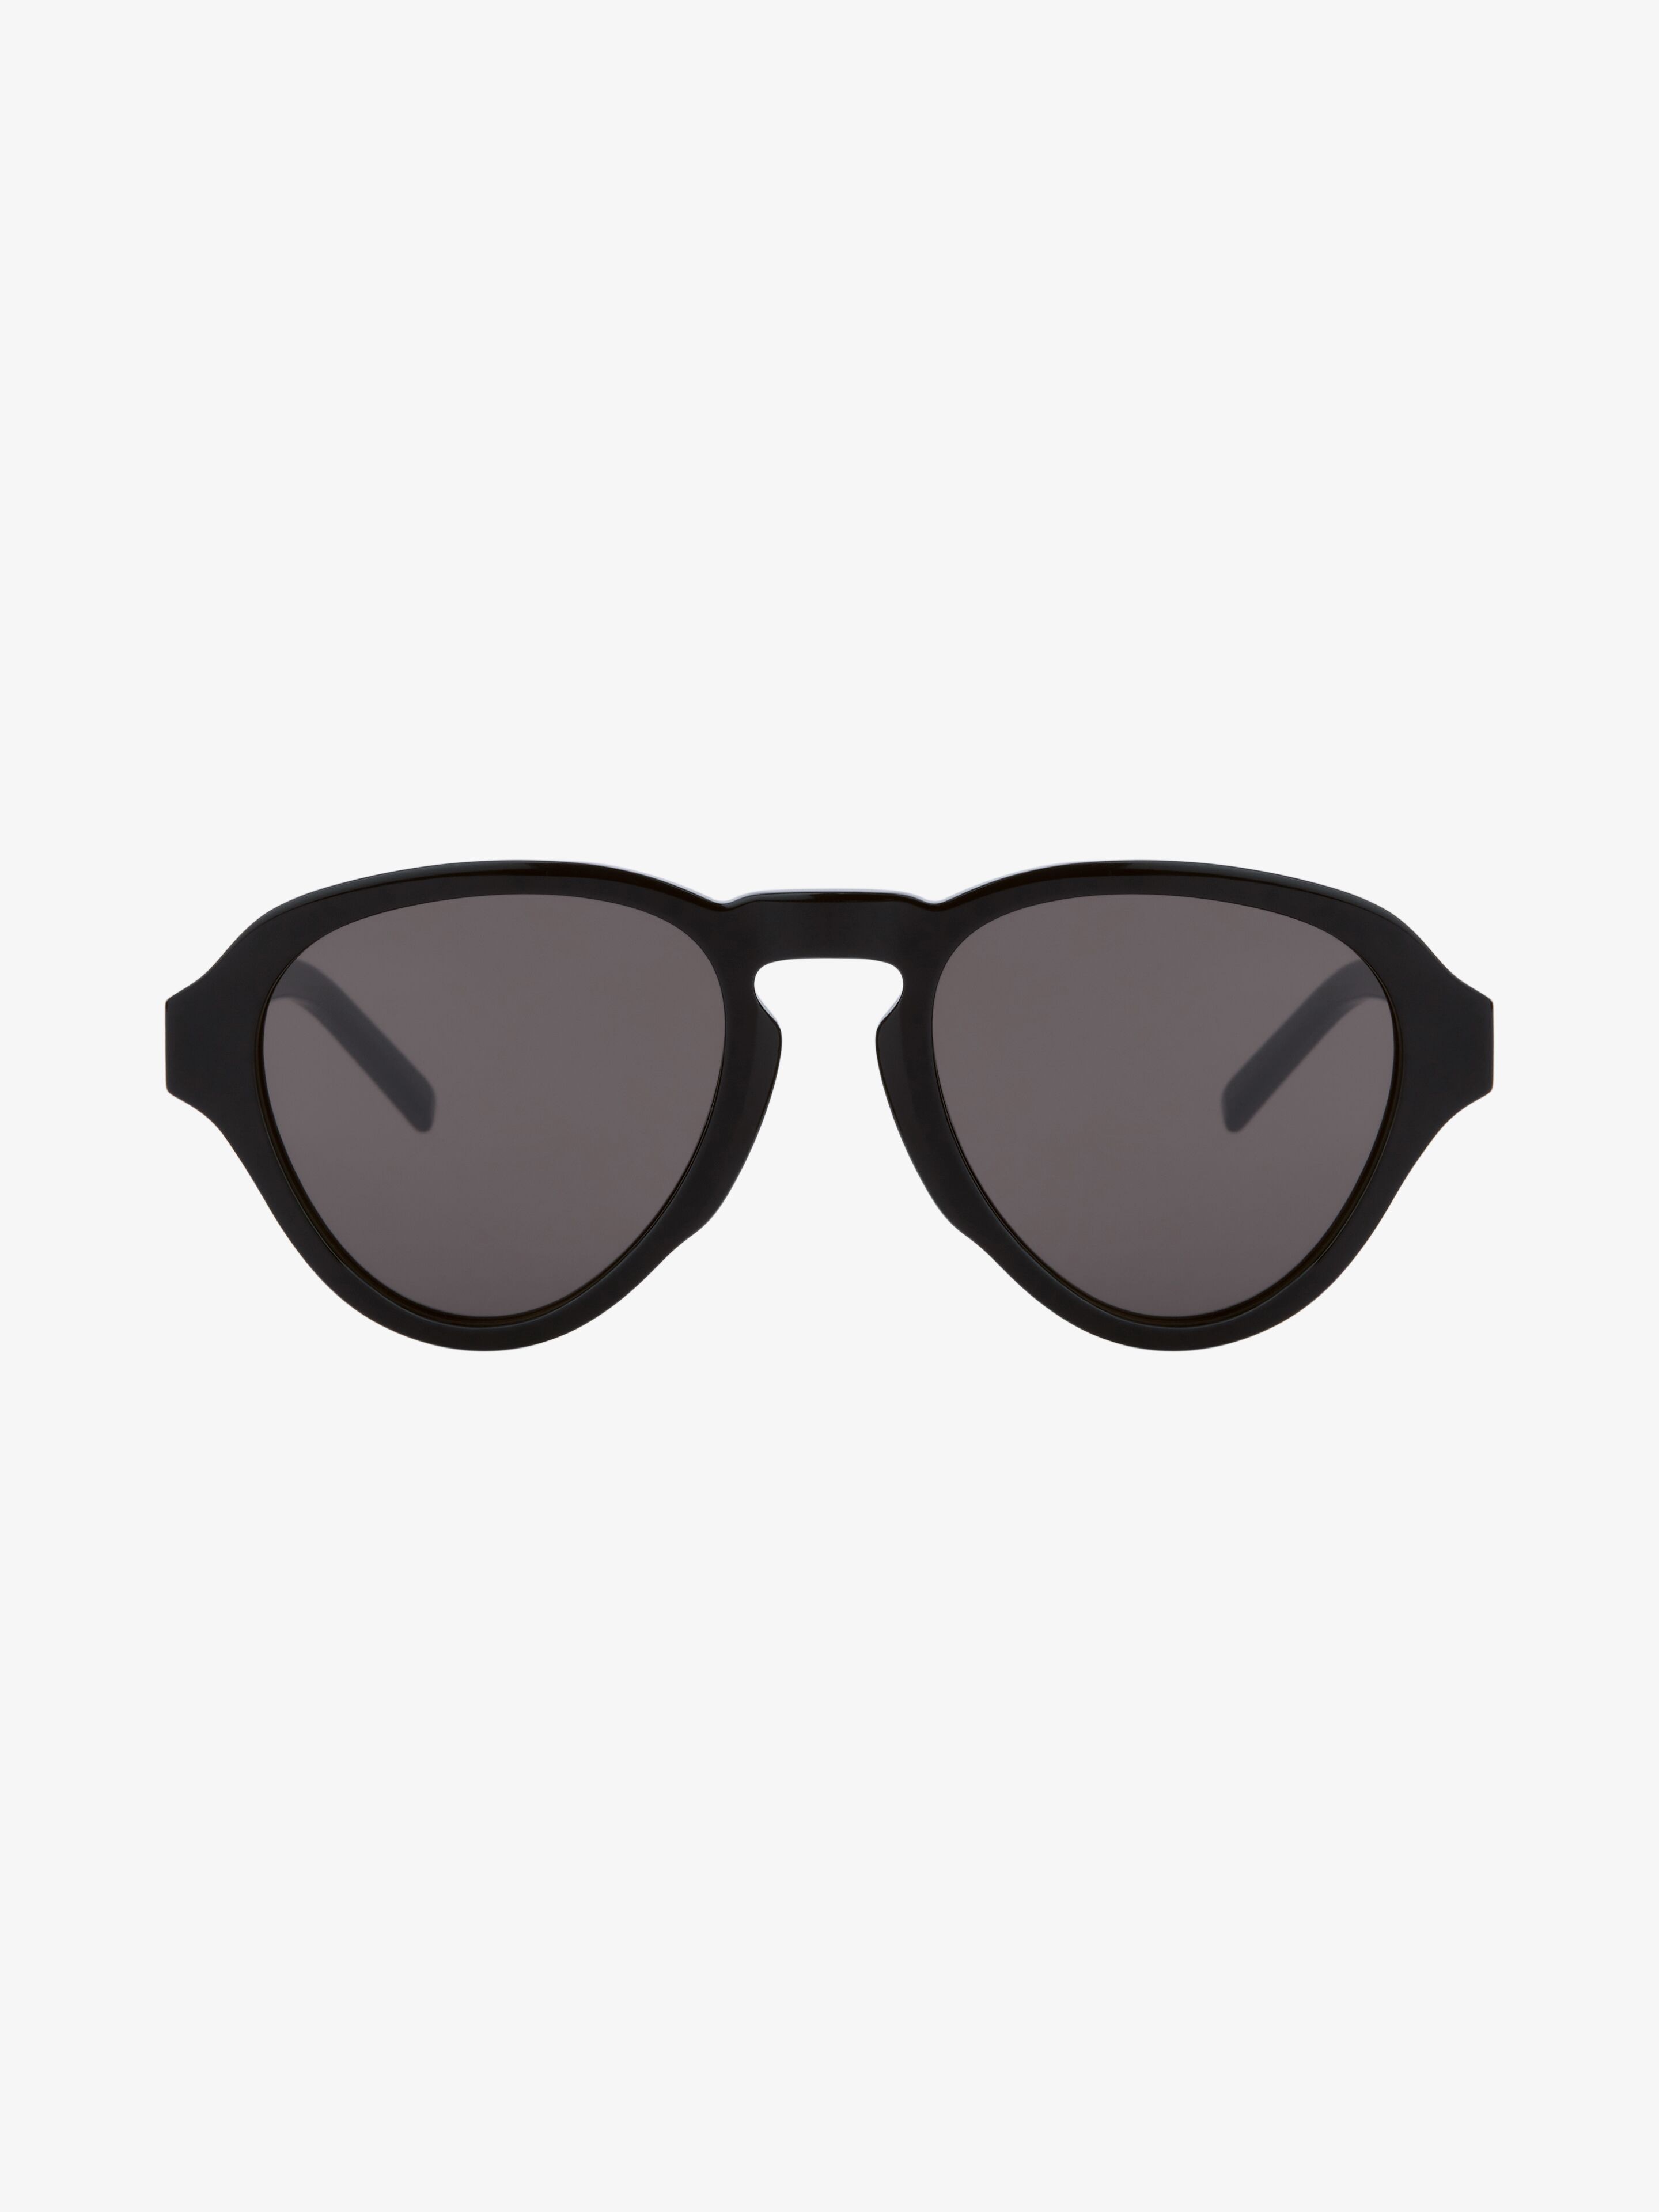 Givenchy Sunglasses sale - discounted price | FASHIOLA INDIA